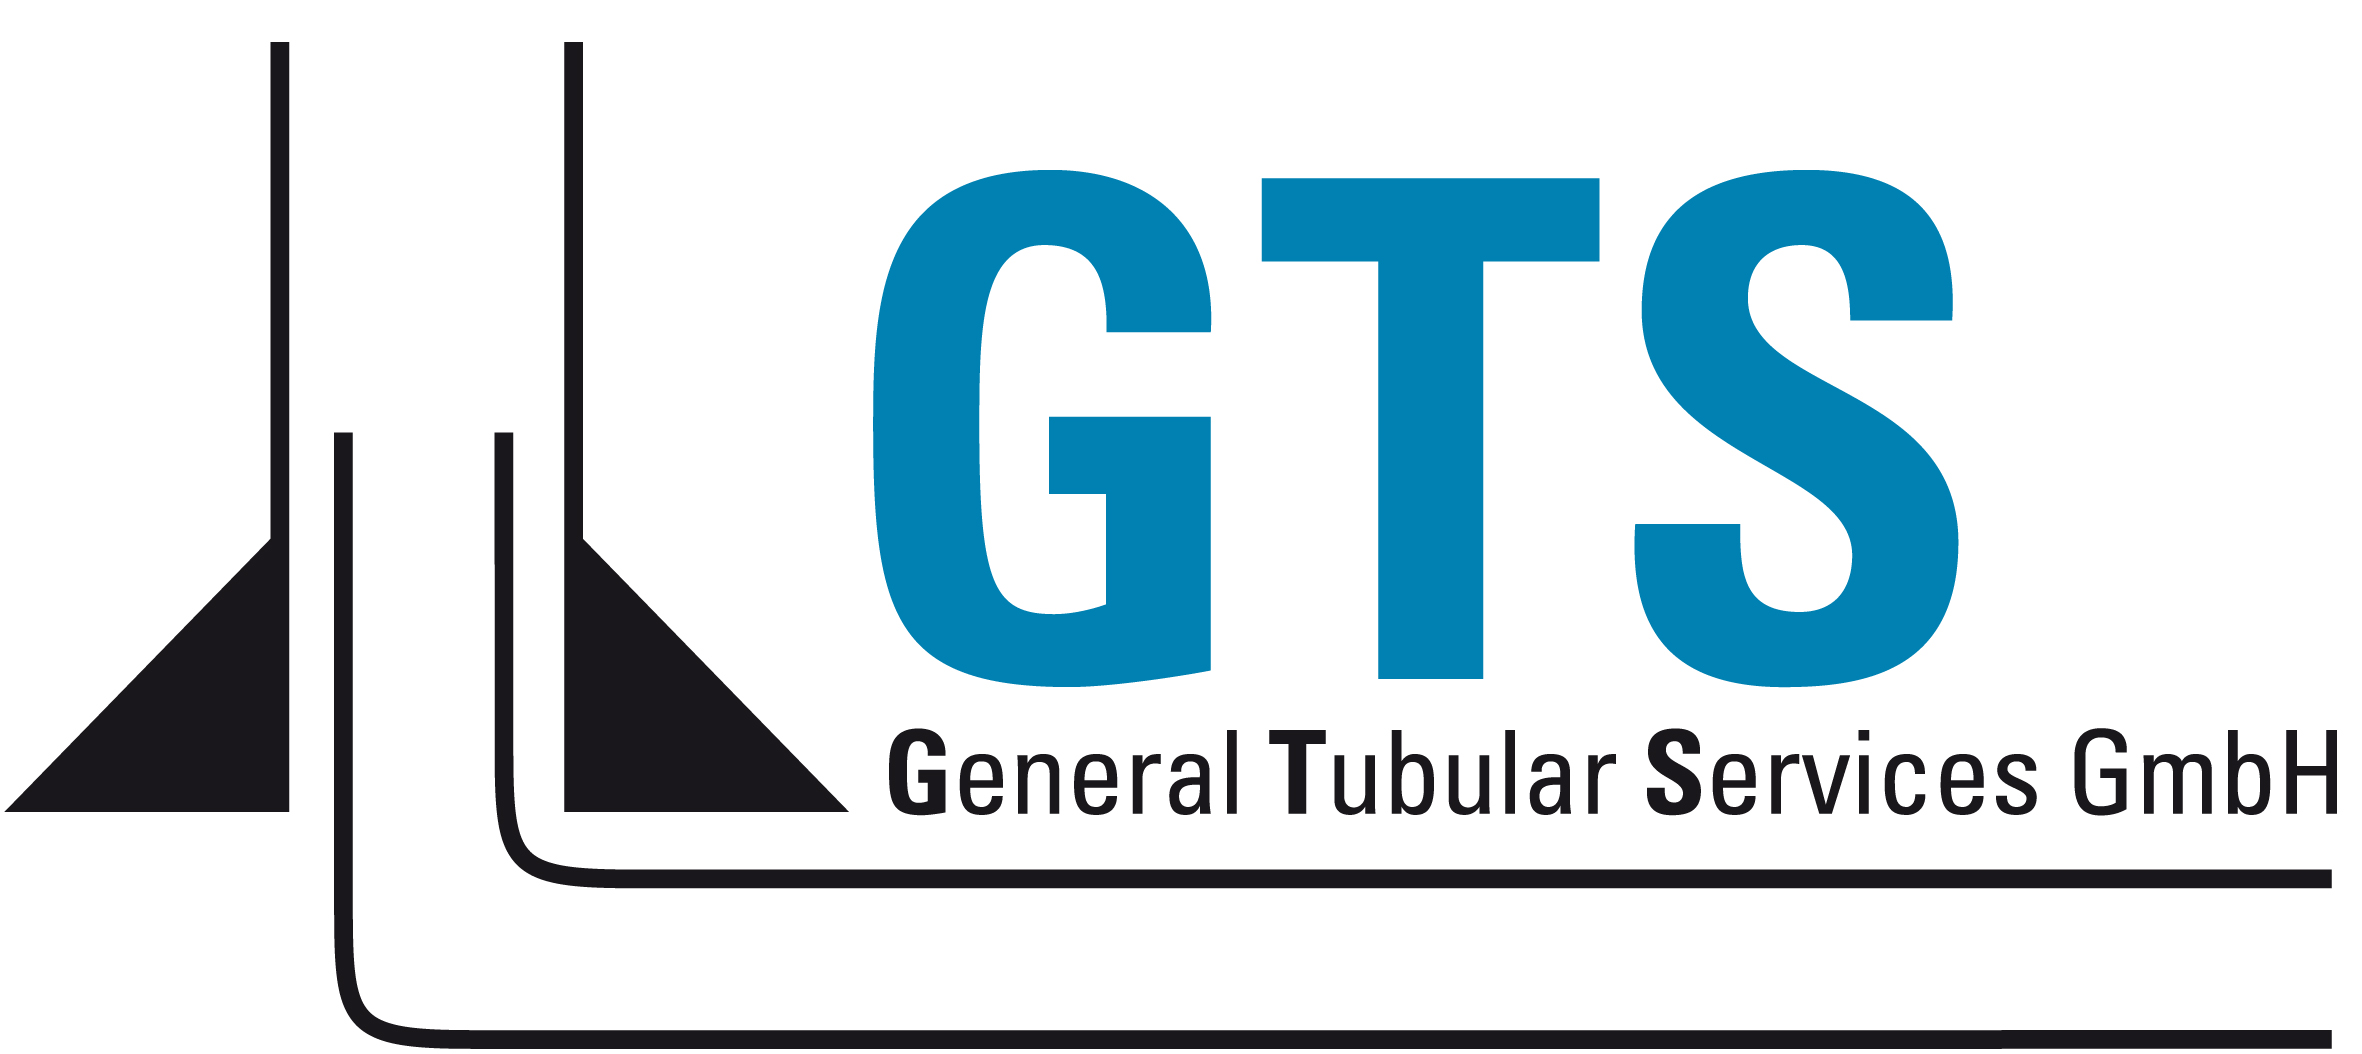 General Tubular Services GmbH